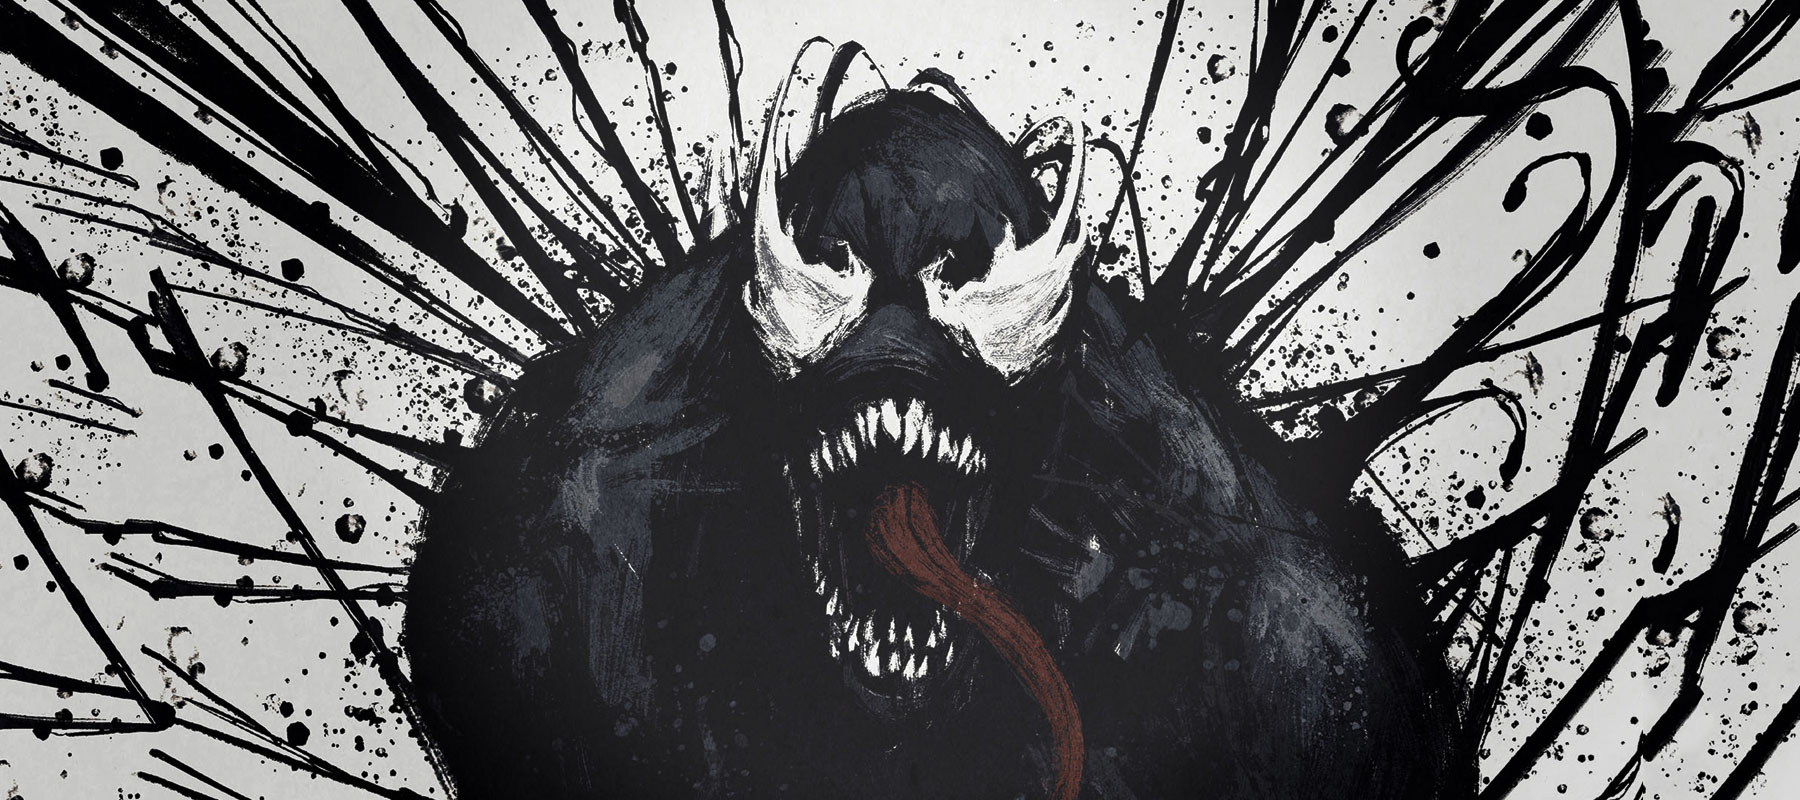 Venom Poster Design